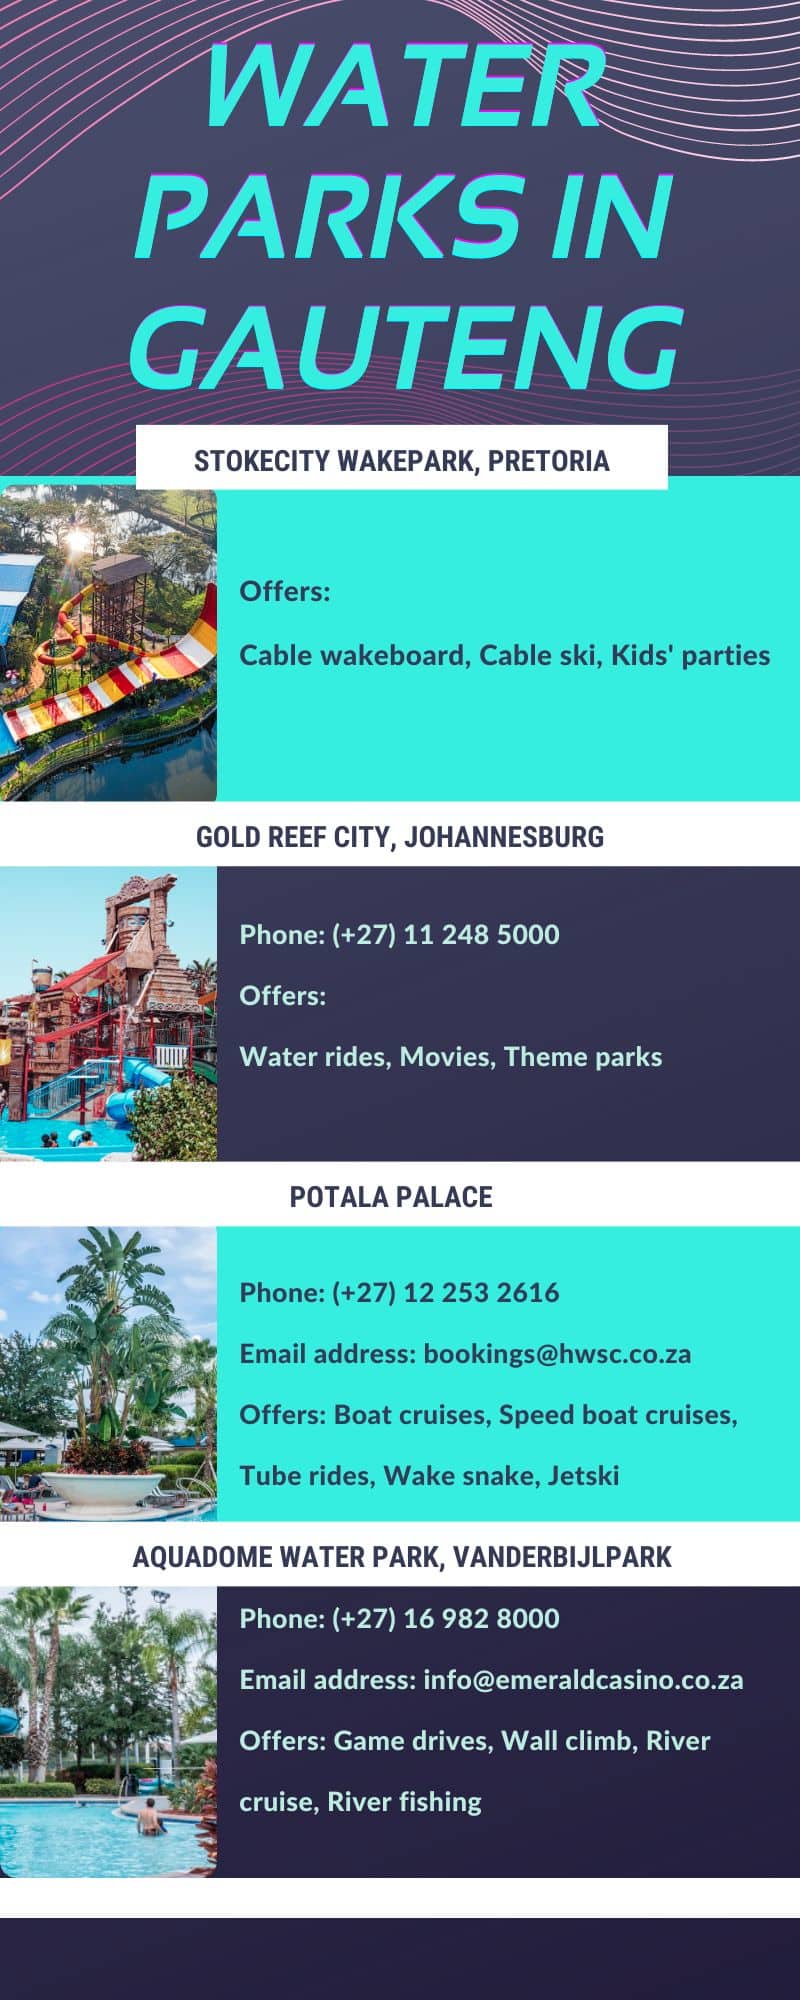 Water parks in Gauteng